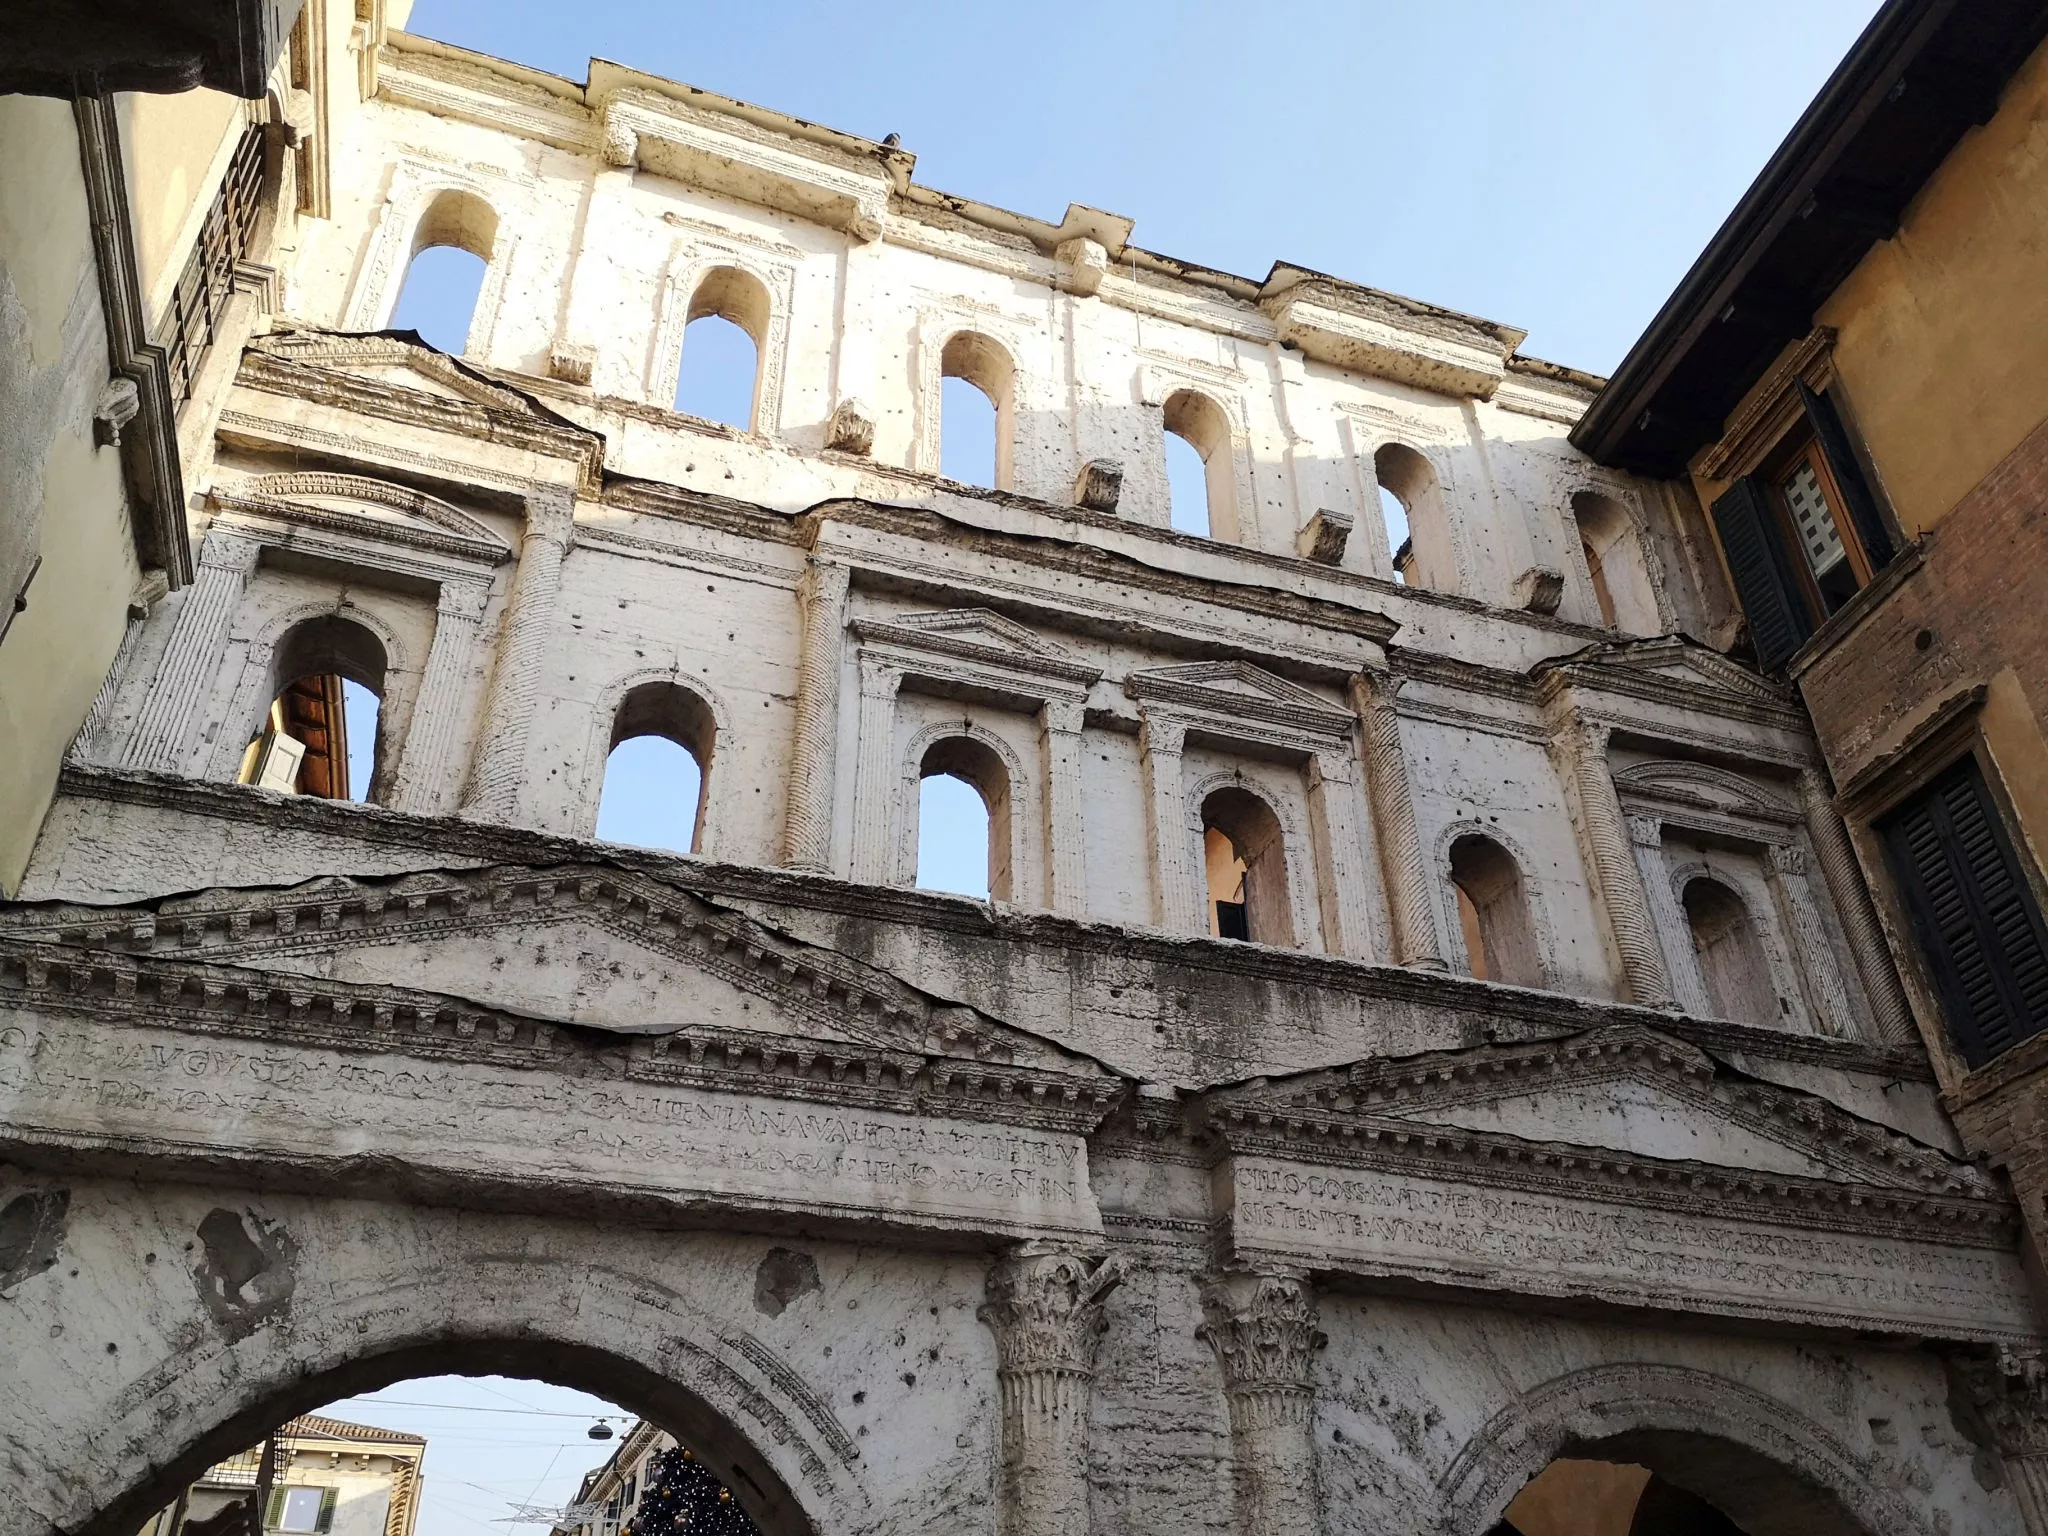 Porta Borsari in Italy, Europe | Architecture - Rated 3.8